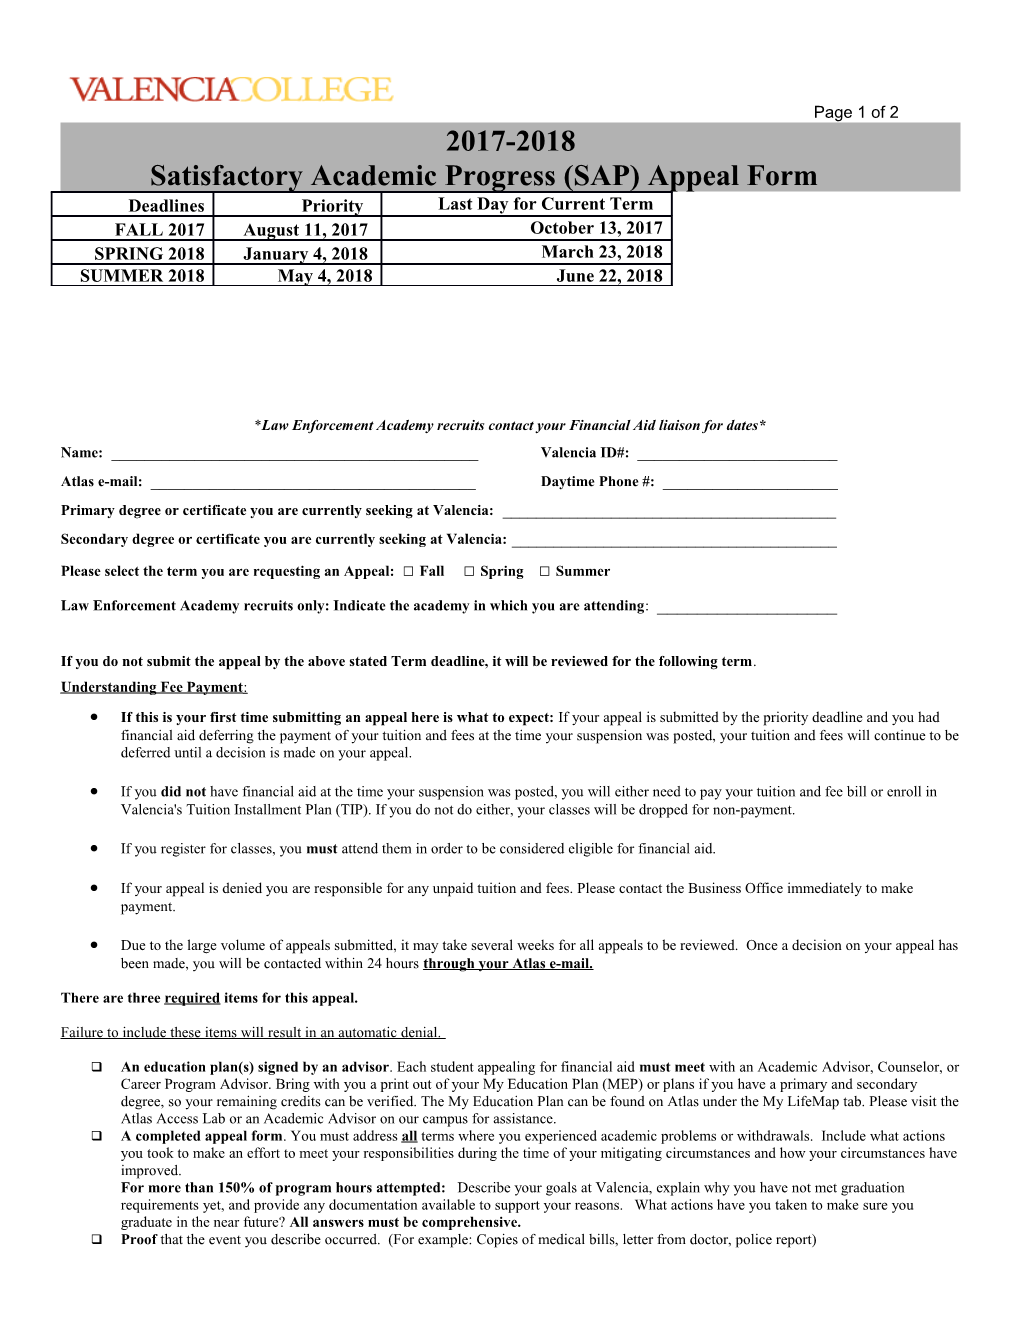 Satisfactory Academic Progress (SAP) Appeal Form